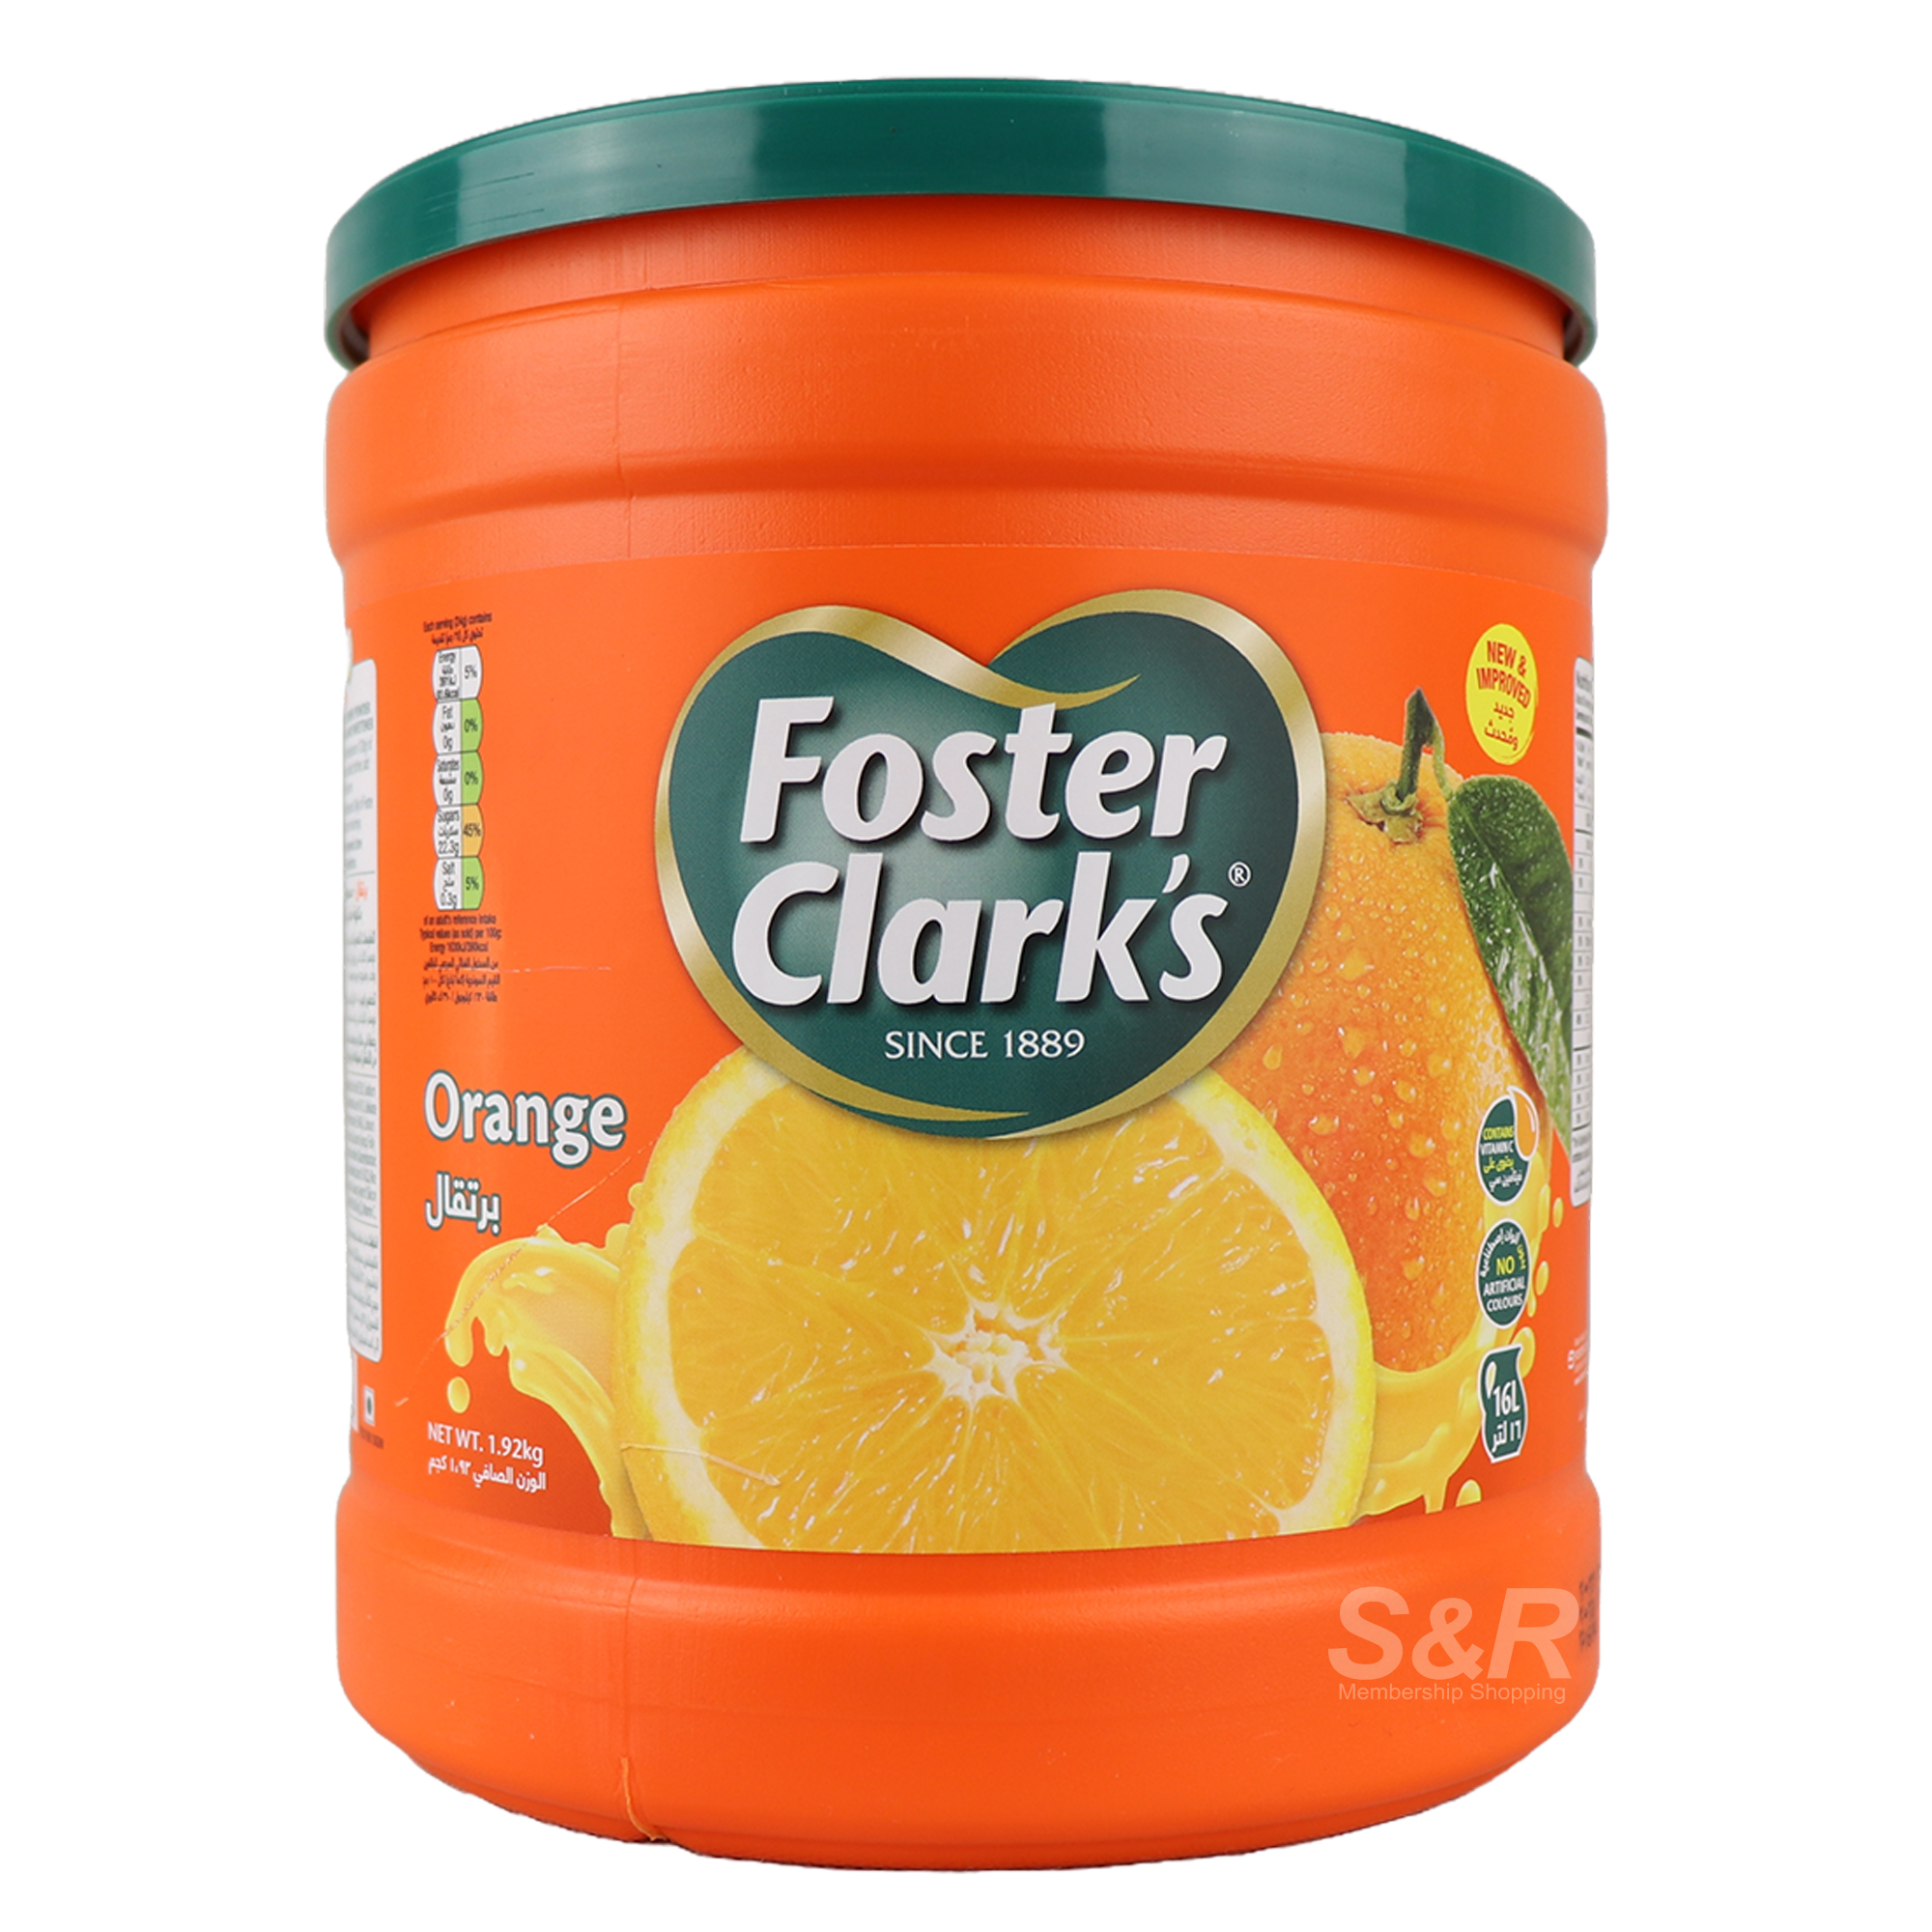 Foster Clark's Orange Juice Powder 1.92kg